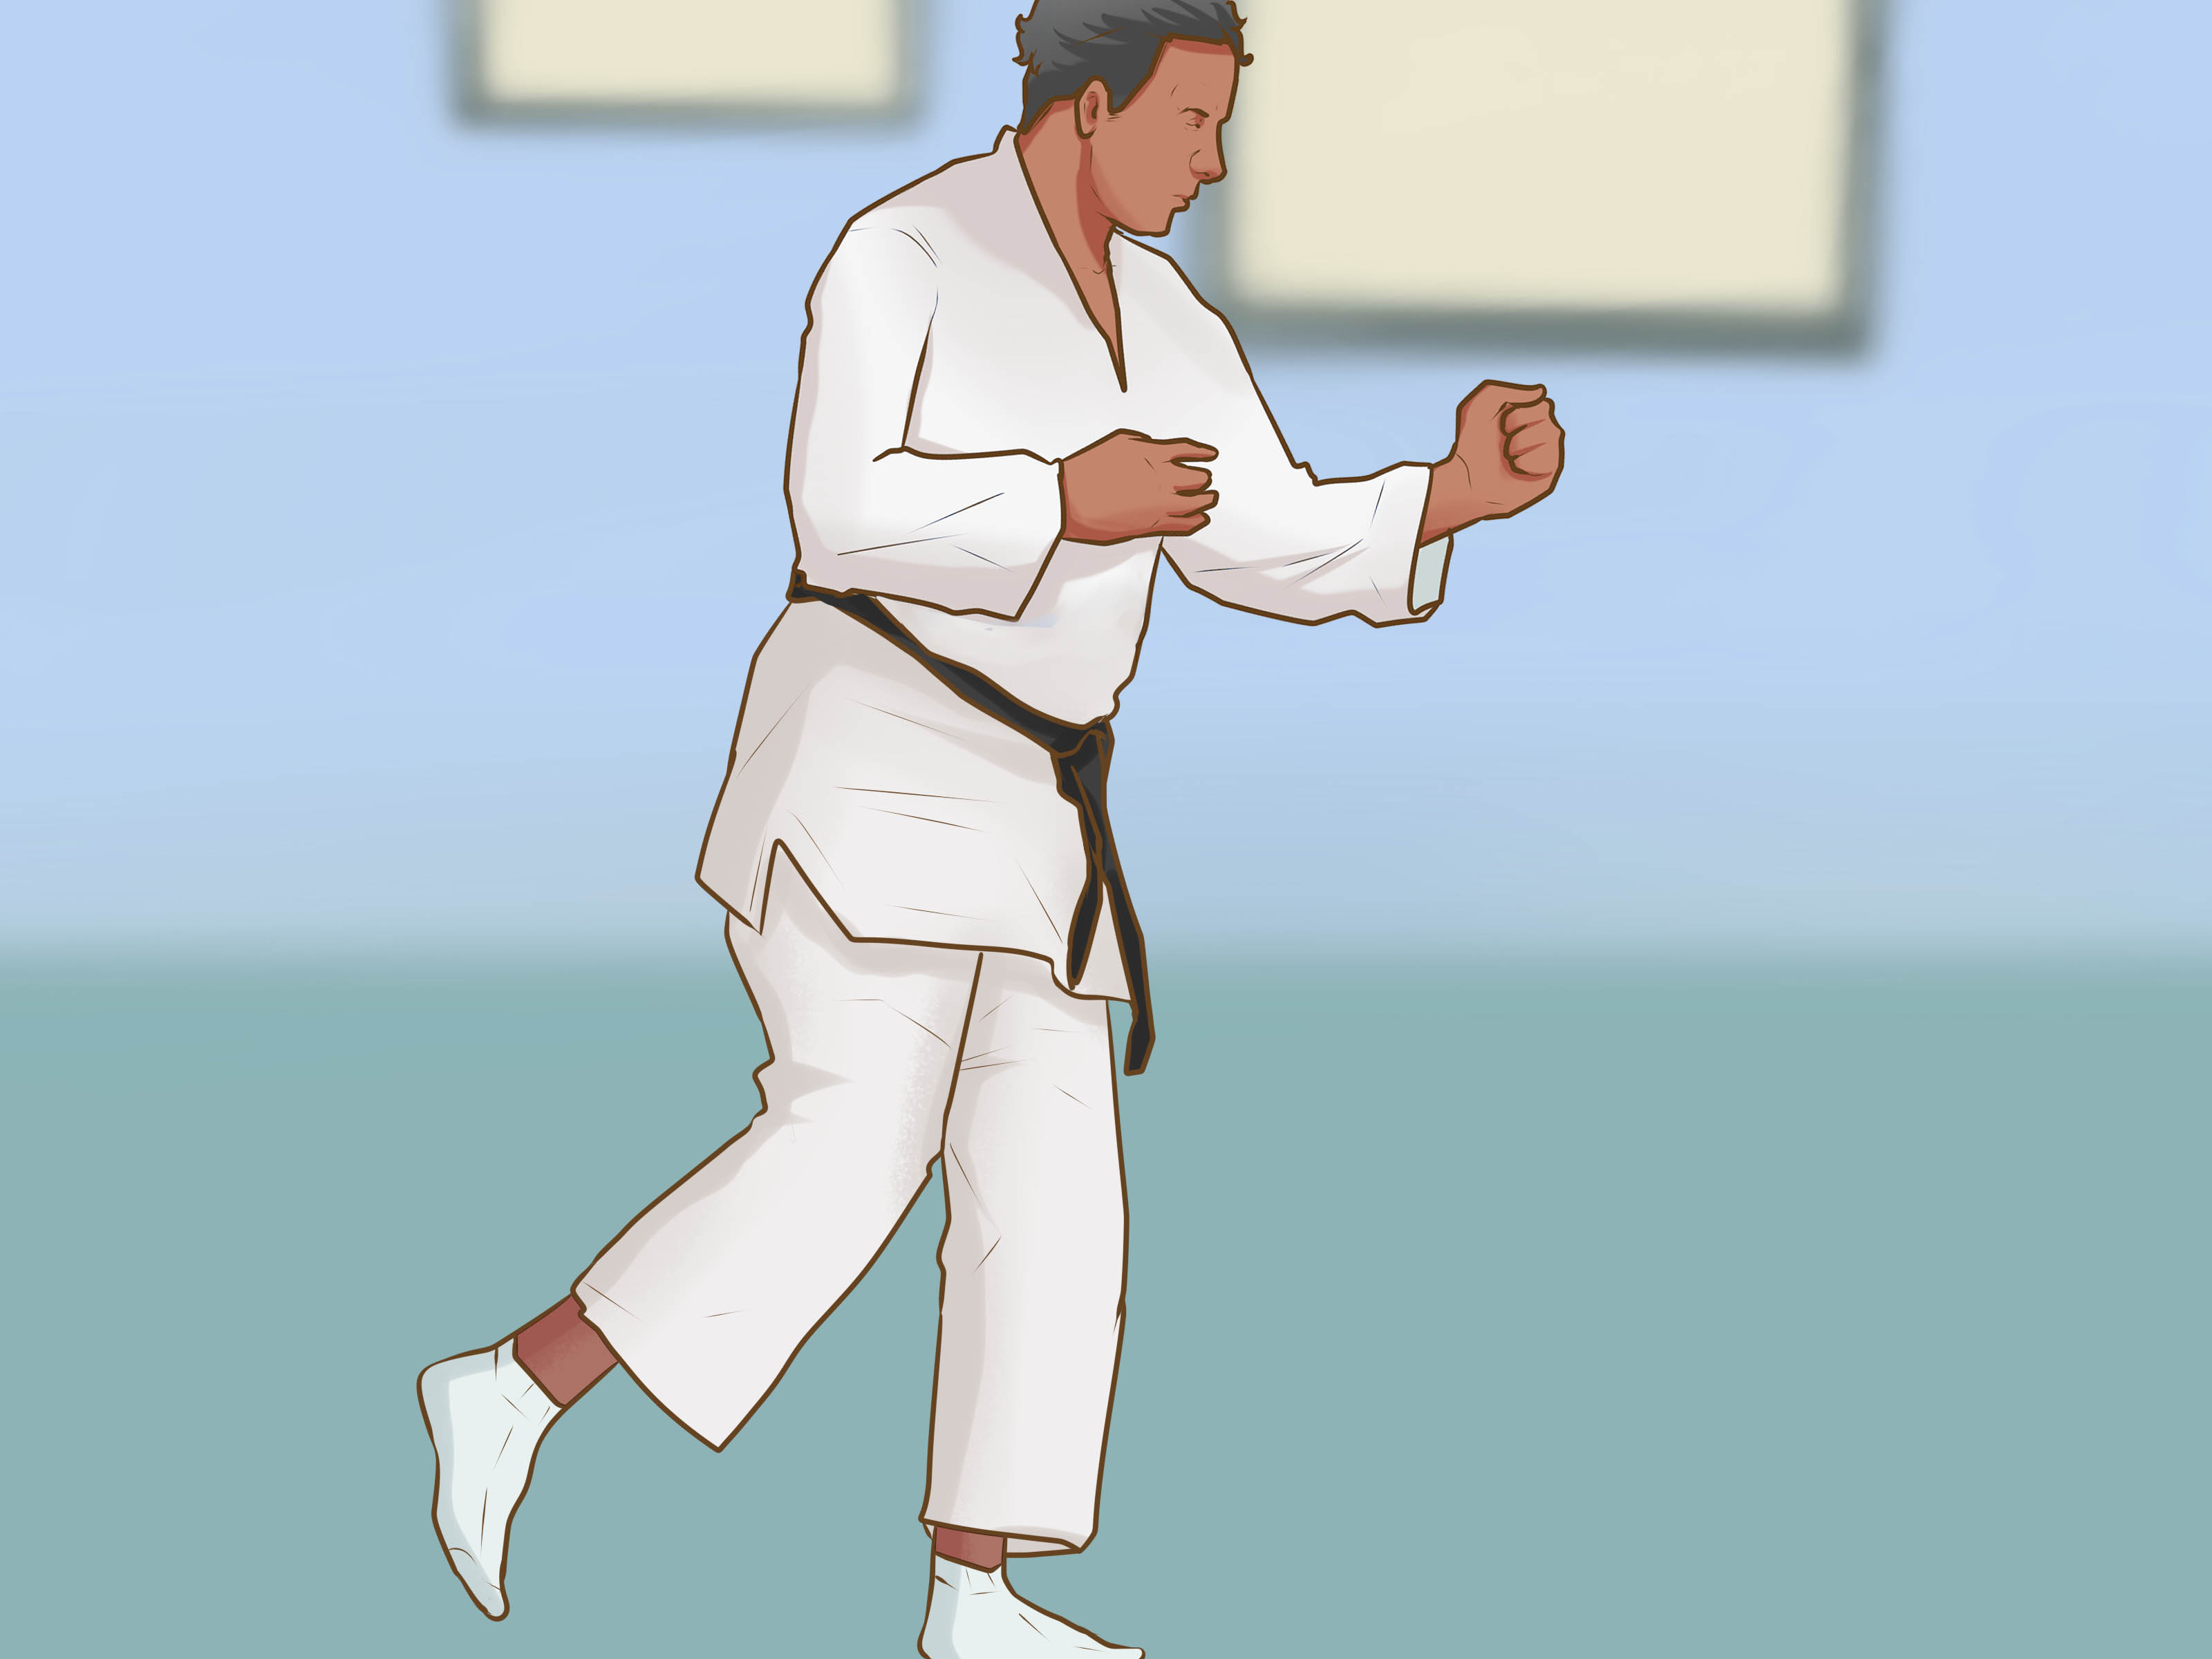 3 Ways to Perform Basic Karate Skills - wikiHow